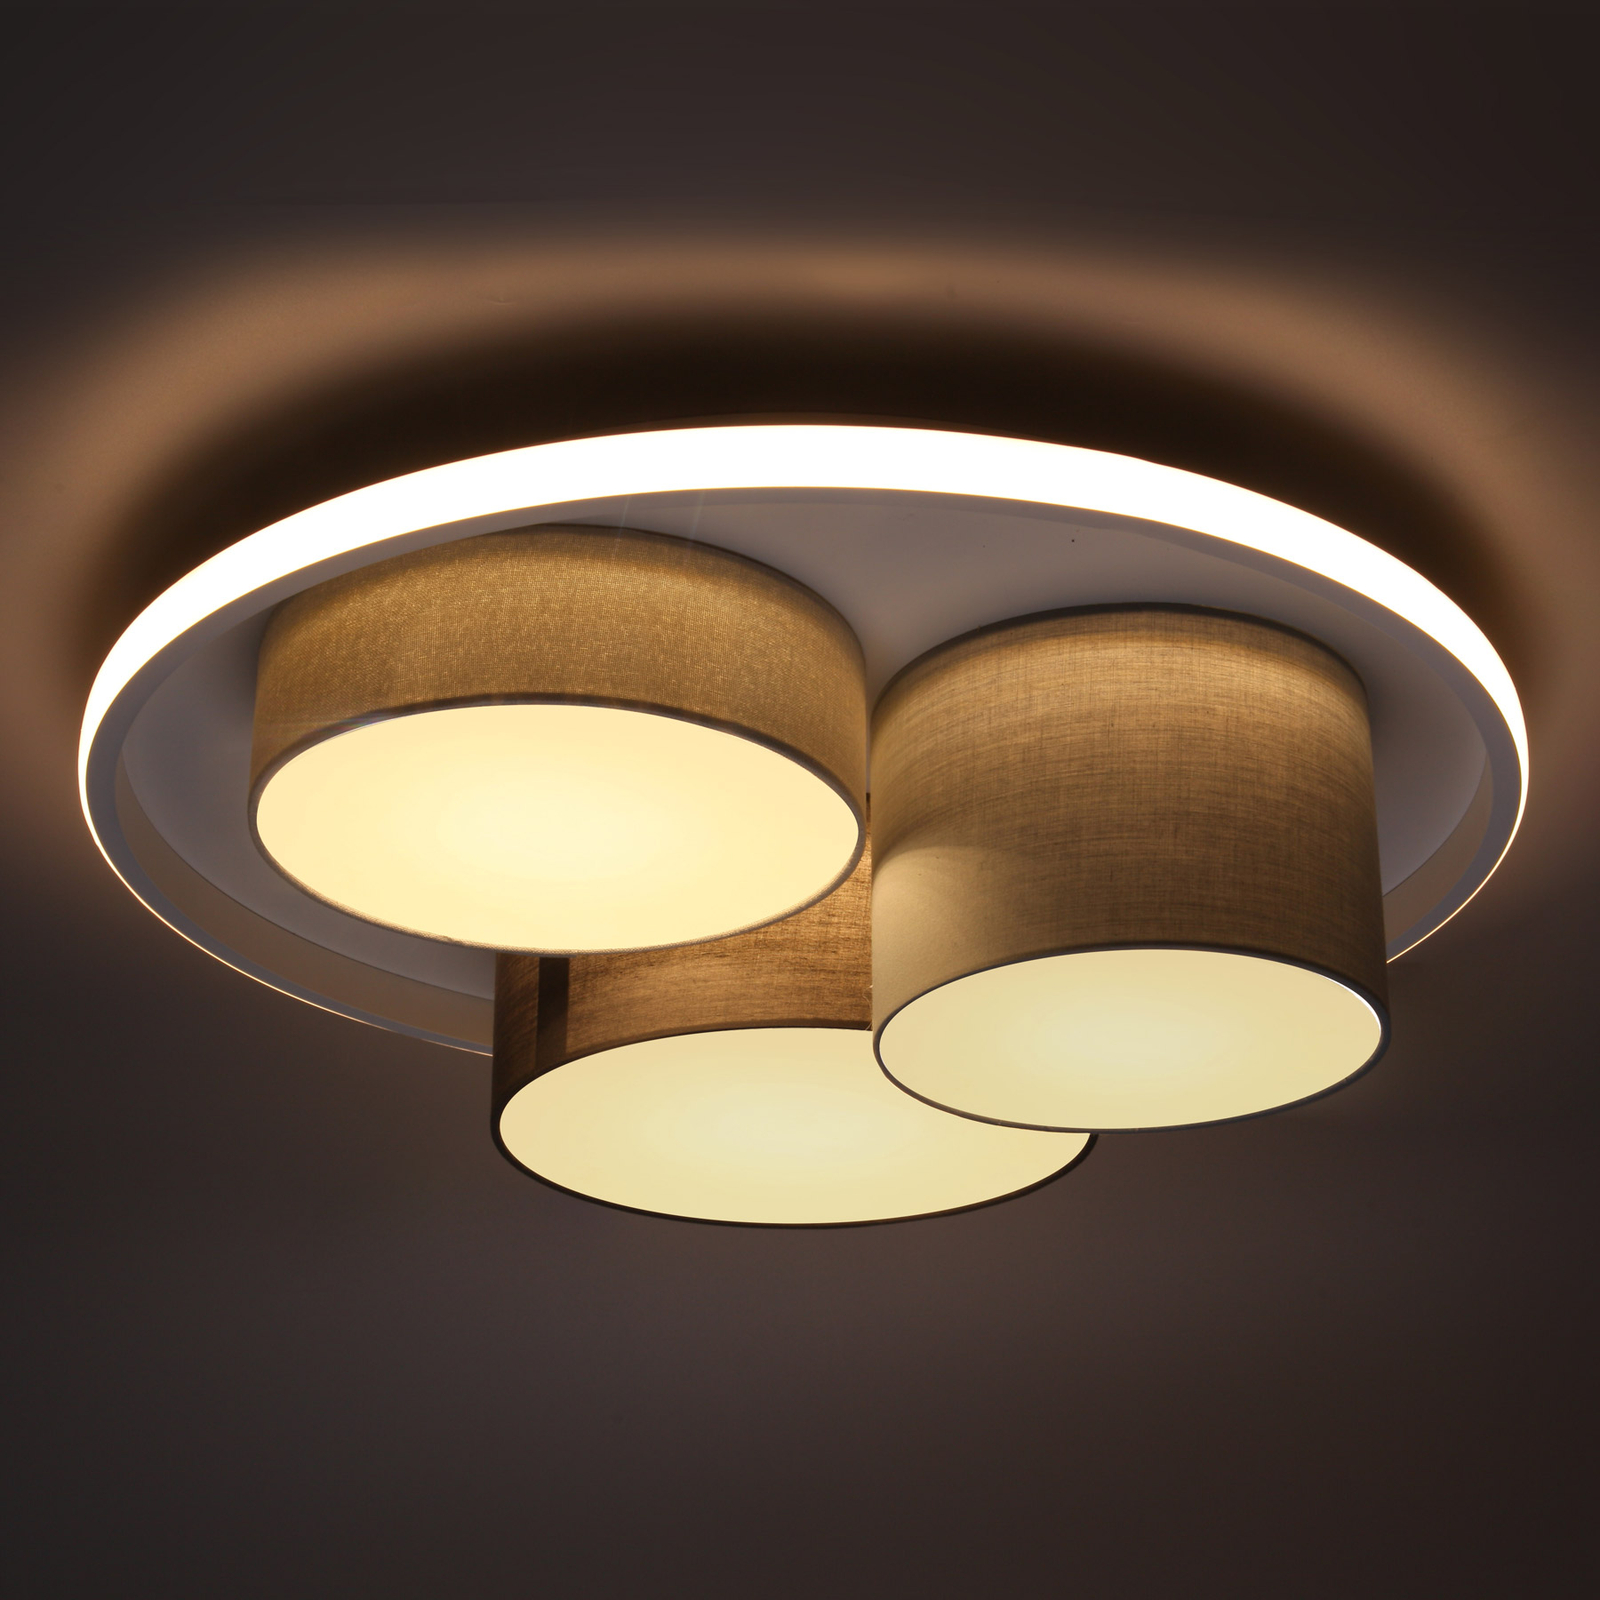 LED ceiling light Eppan, 3-bulb, dimmable